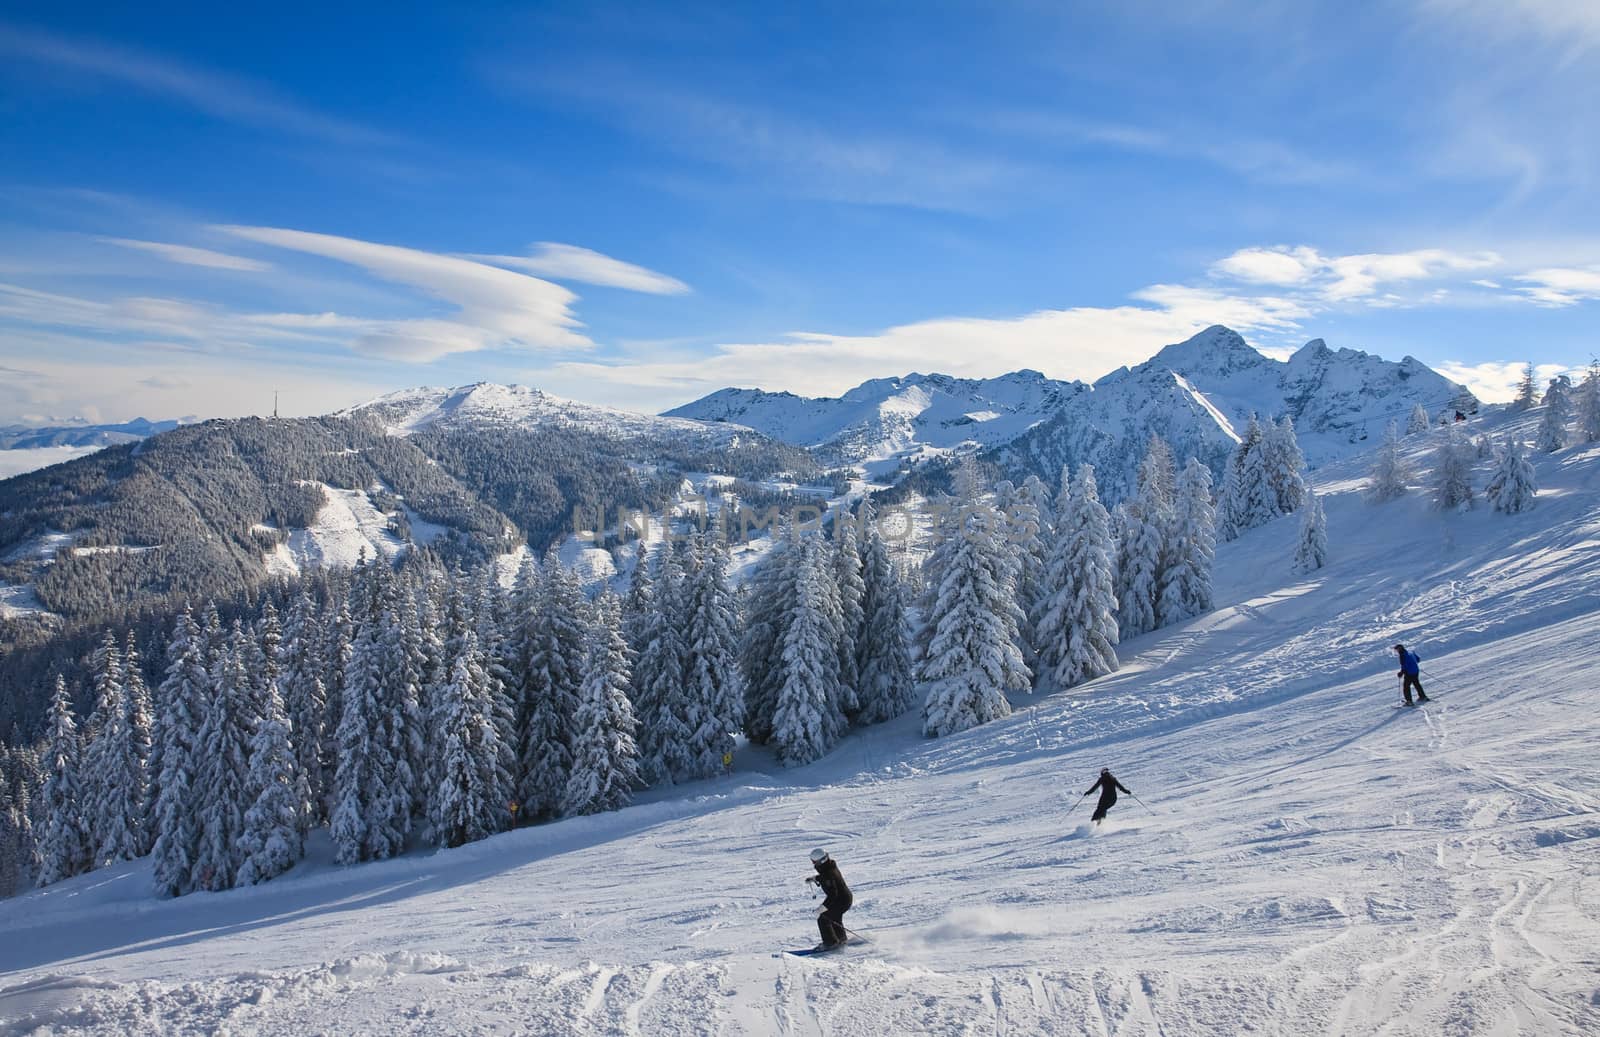 Ski resort Schladming . Austria by nikolpetr